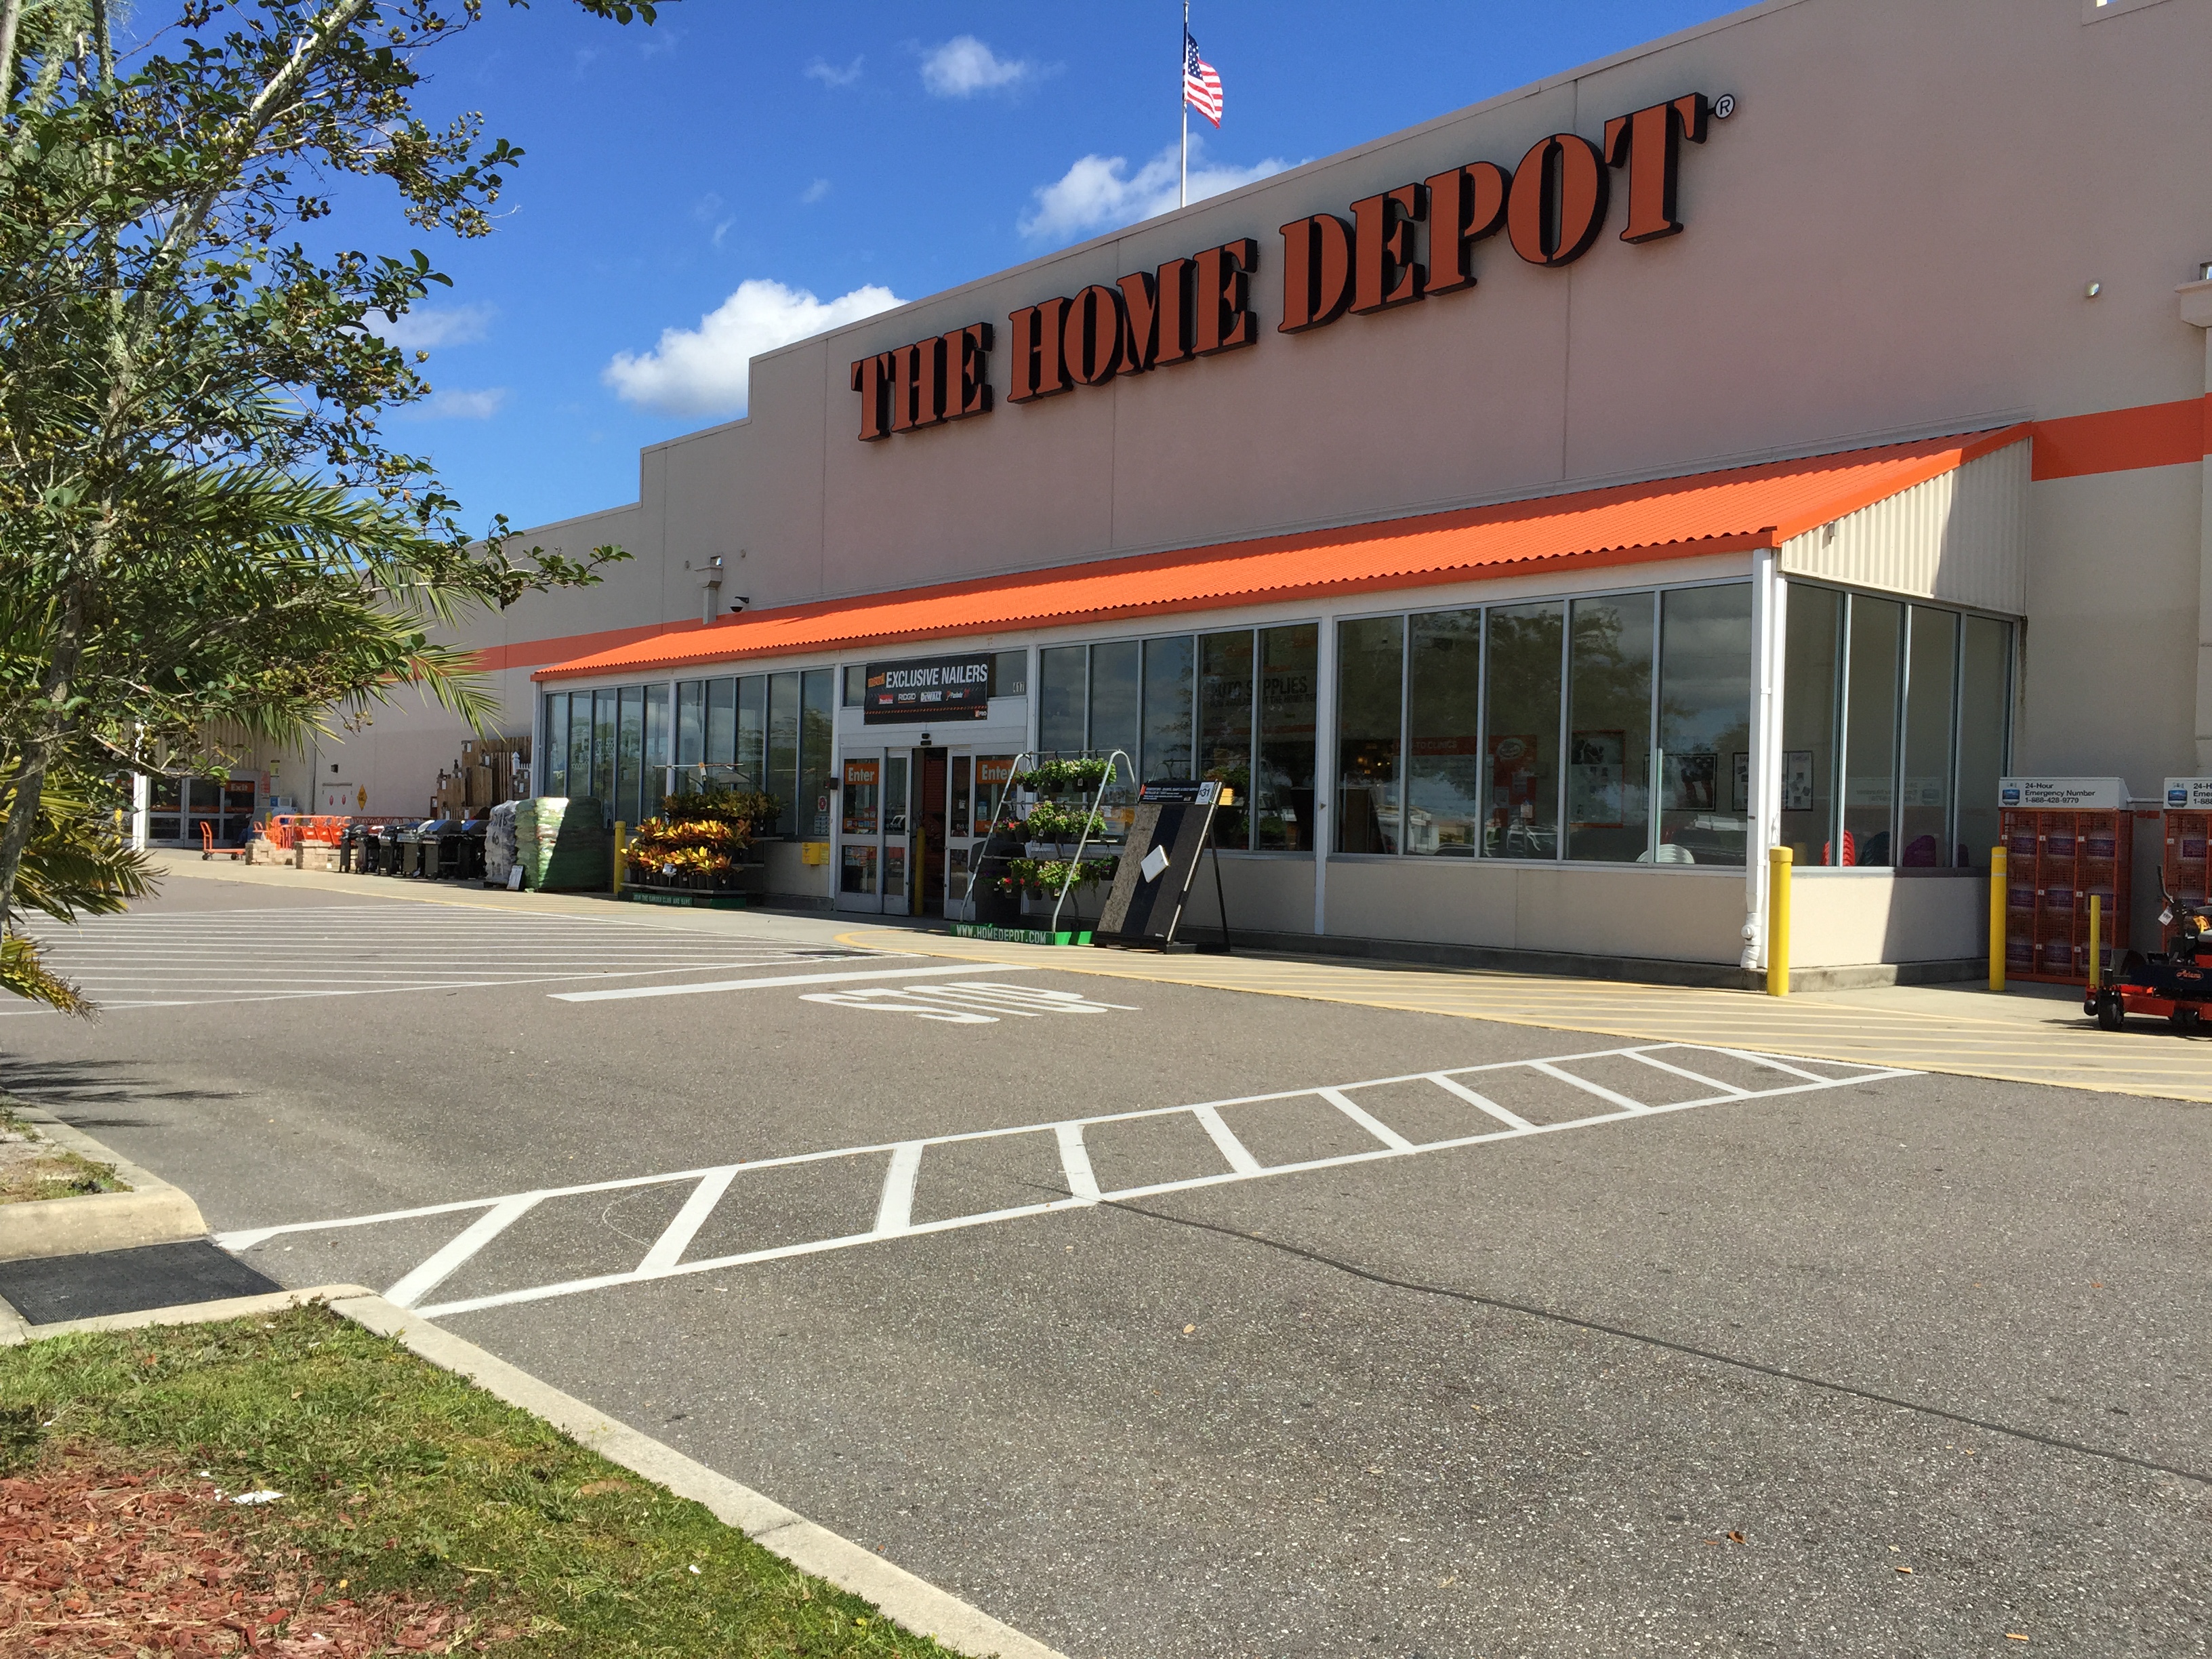 The Home Depot - Palatka, FL - Business Information